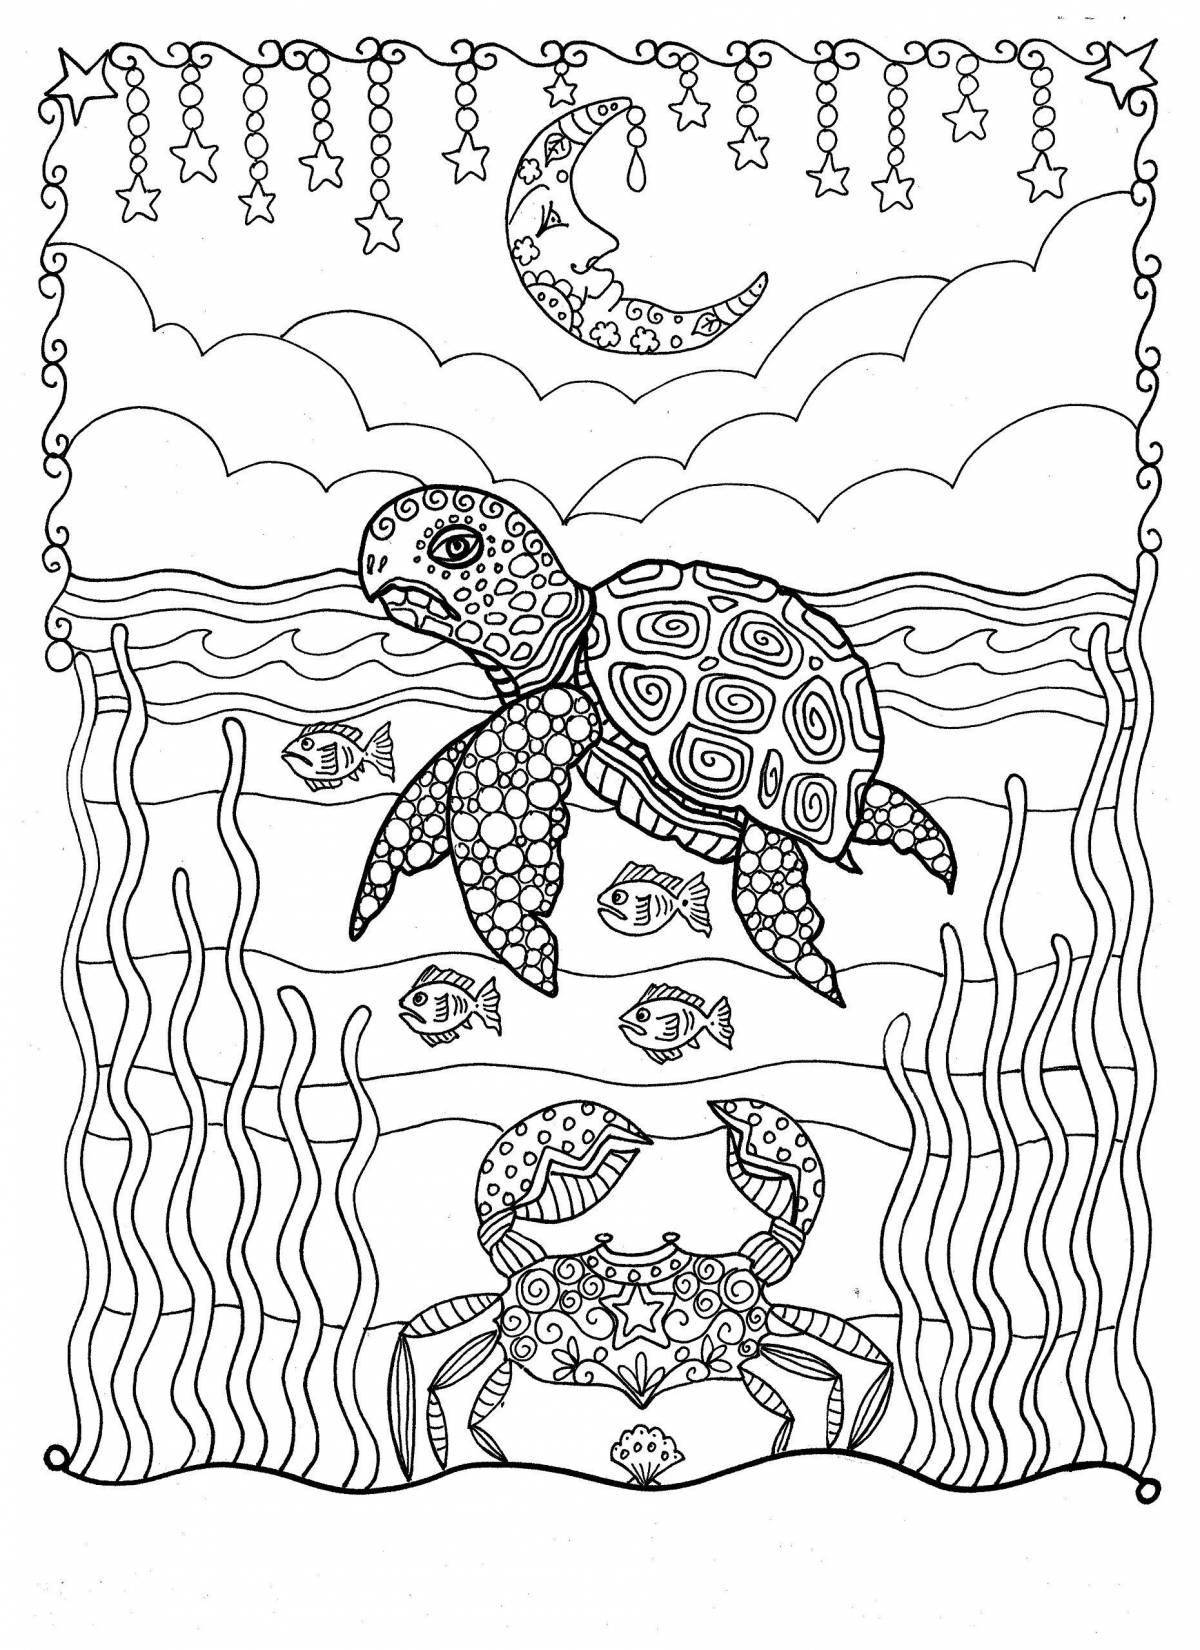 Magic anti-stress turtle coloring book